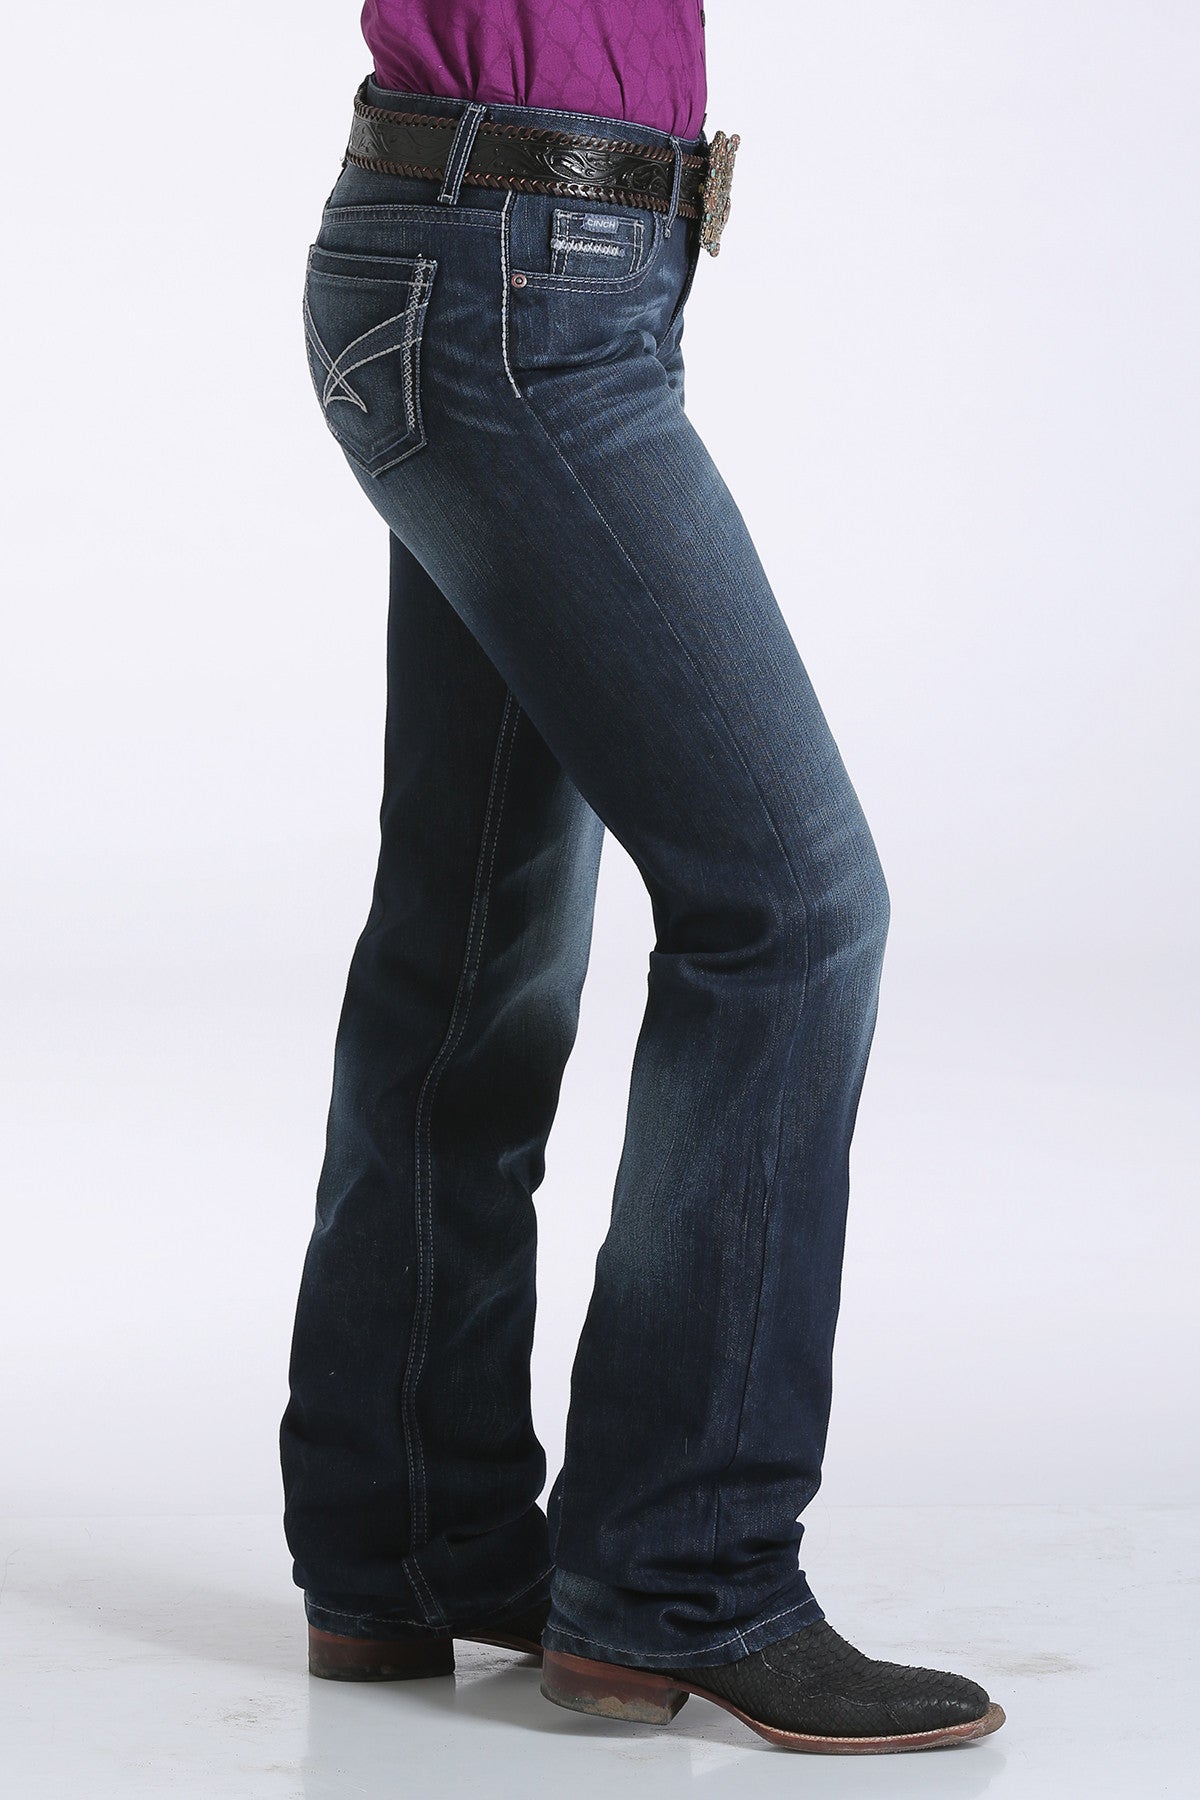 cinch dooley jeans